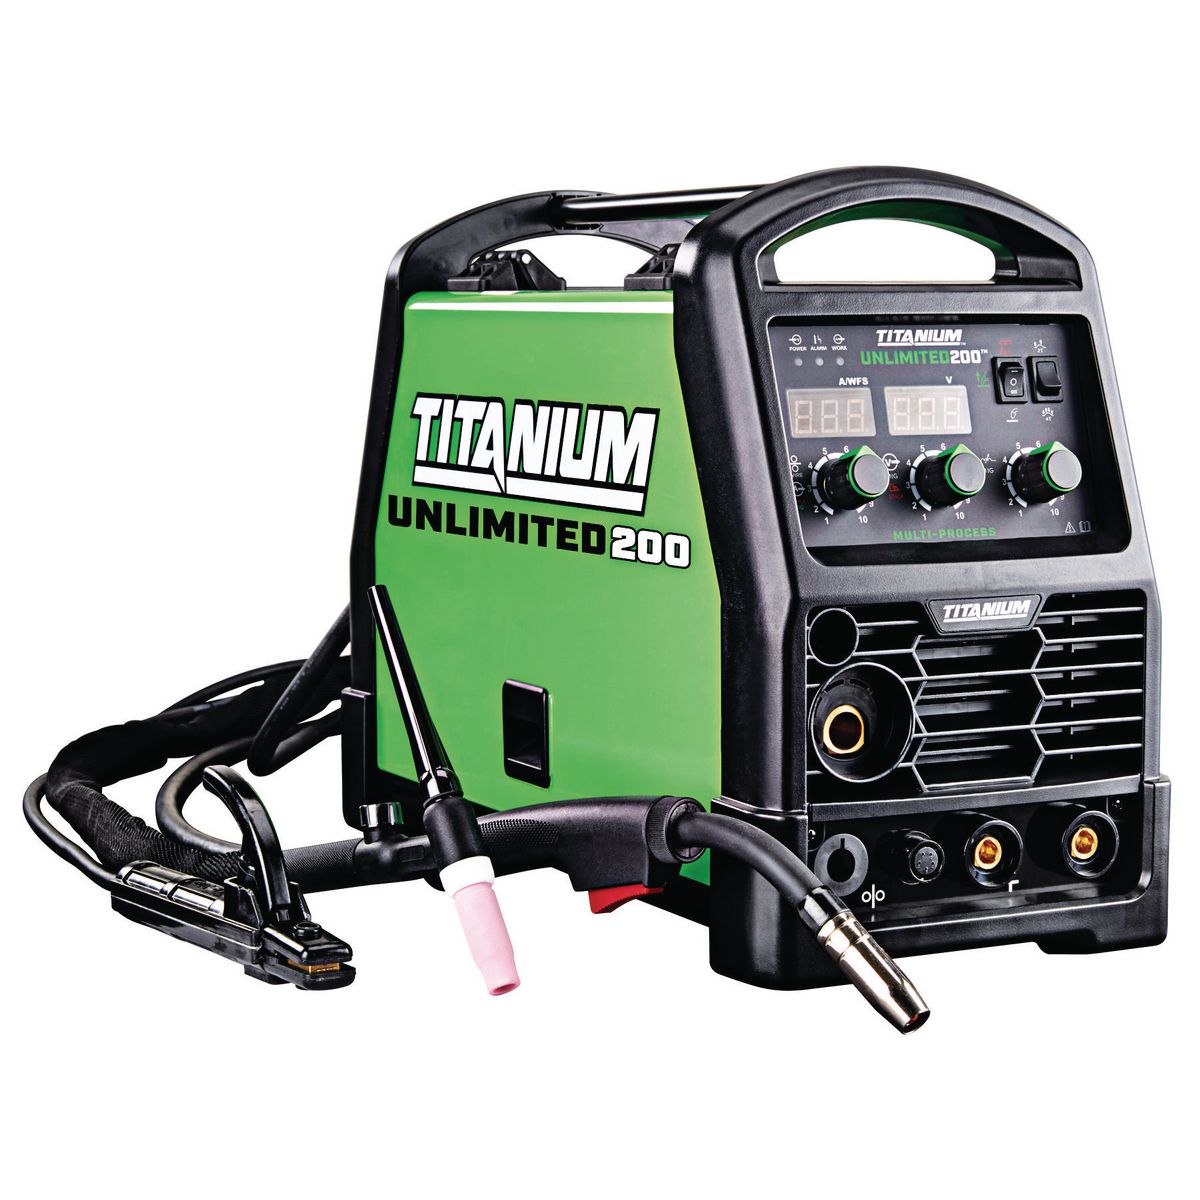 TITANIUM™ Unlimited 200™ Professional Multiprocess Welder With 120/240 Volt Input - Item 64806